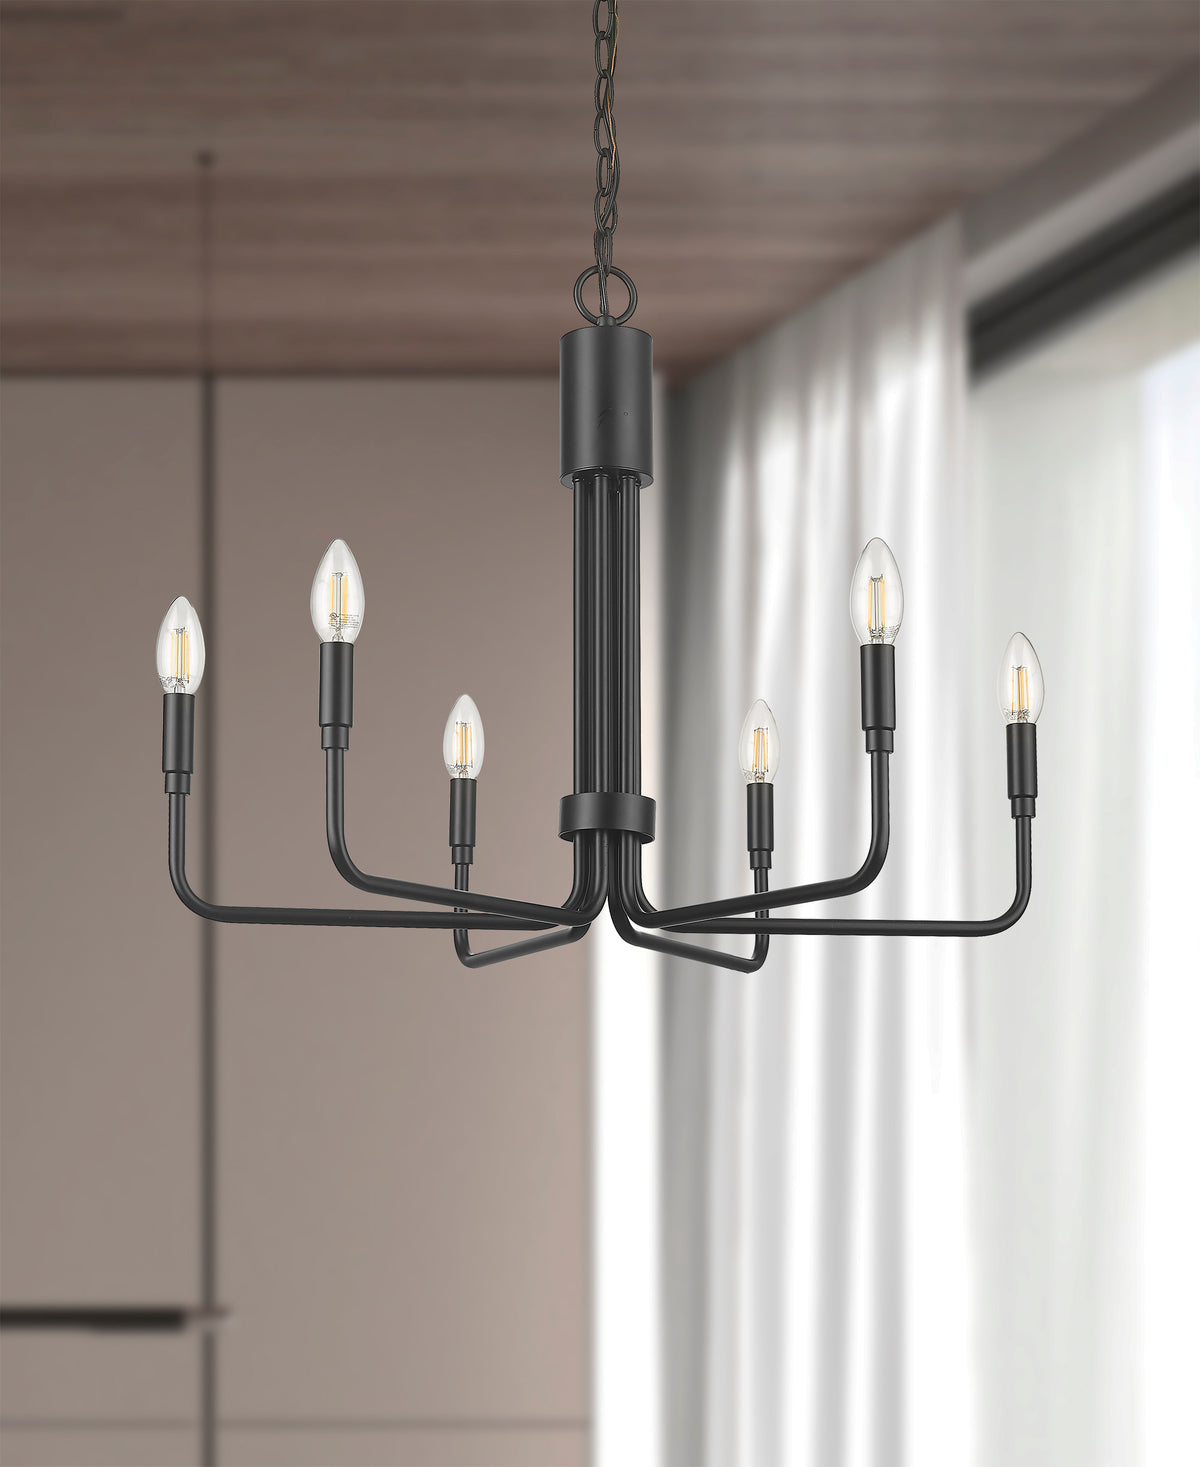 6-light black matte modern candle style chandelier